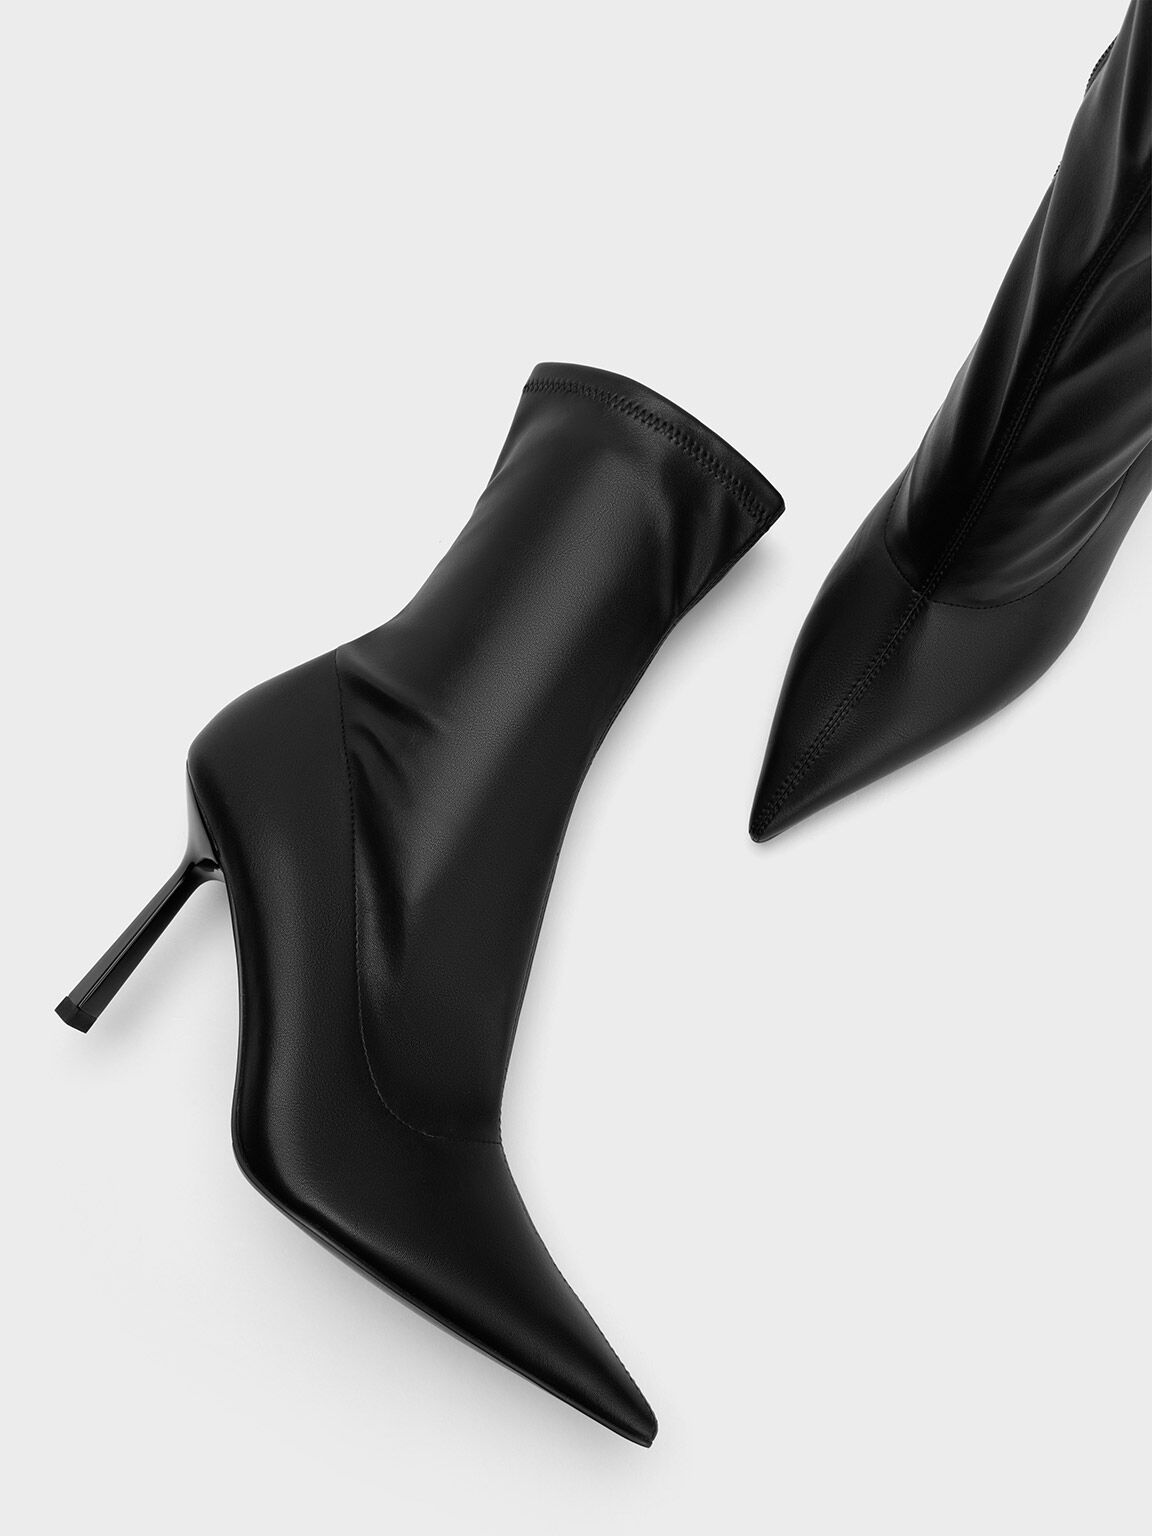 Black Suede Boots - Knee High Boots - Platform High Heel Boots - Lulus